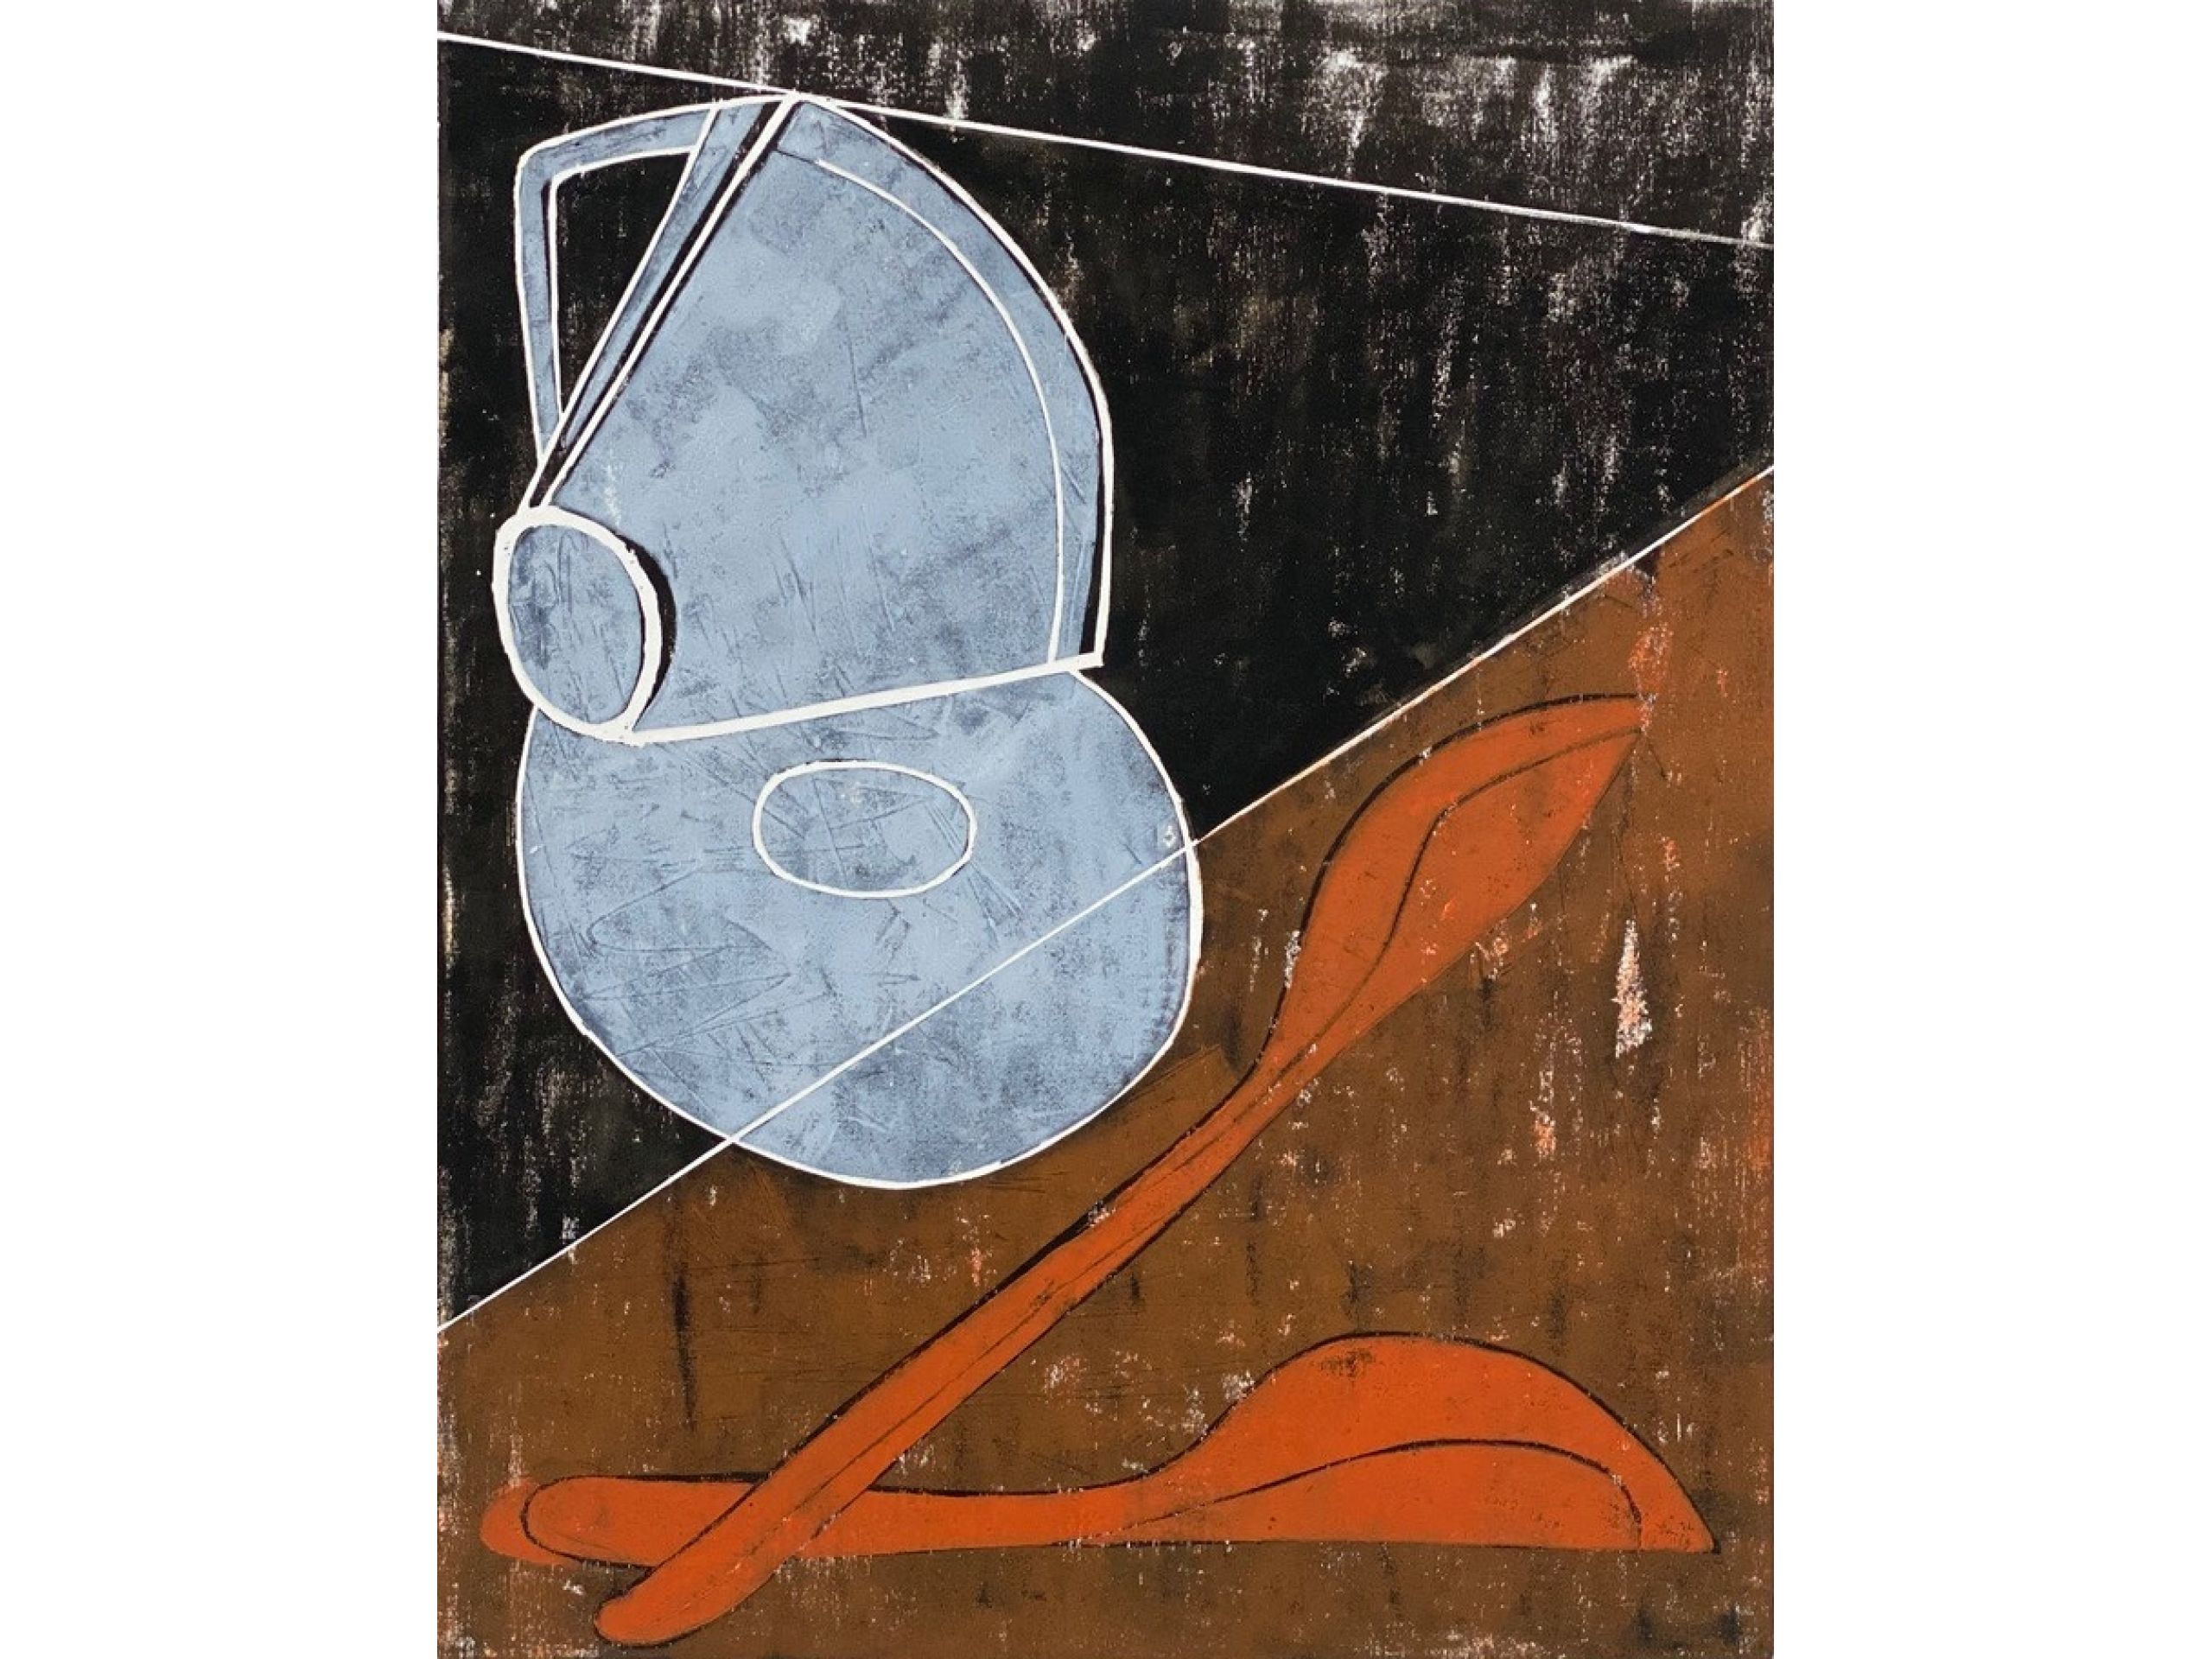 Martina Geist, 'Tasse, Teller, Löffel', 2016, Holzschnitt, 52 x 42 cm, 250 € 